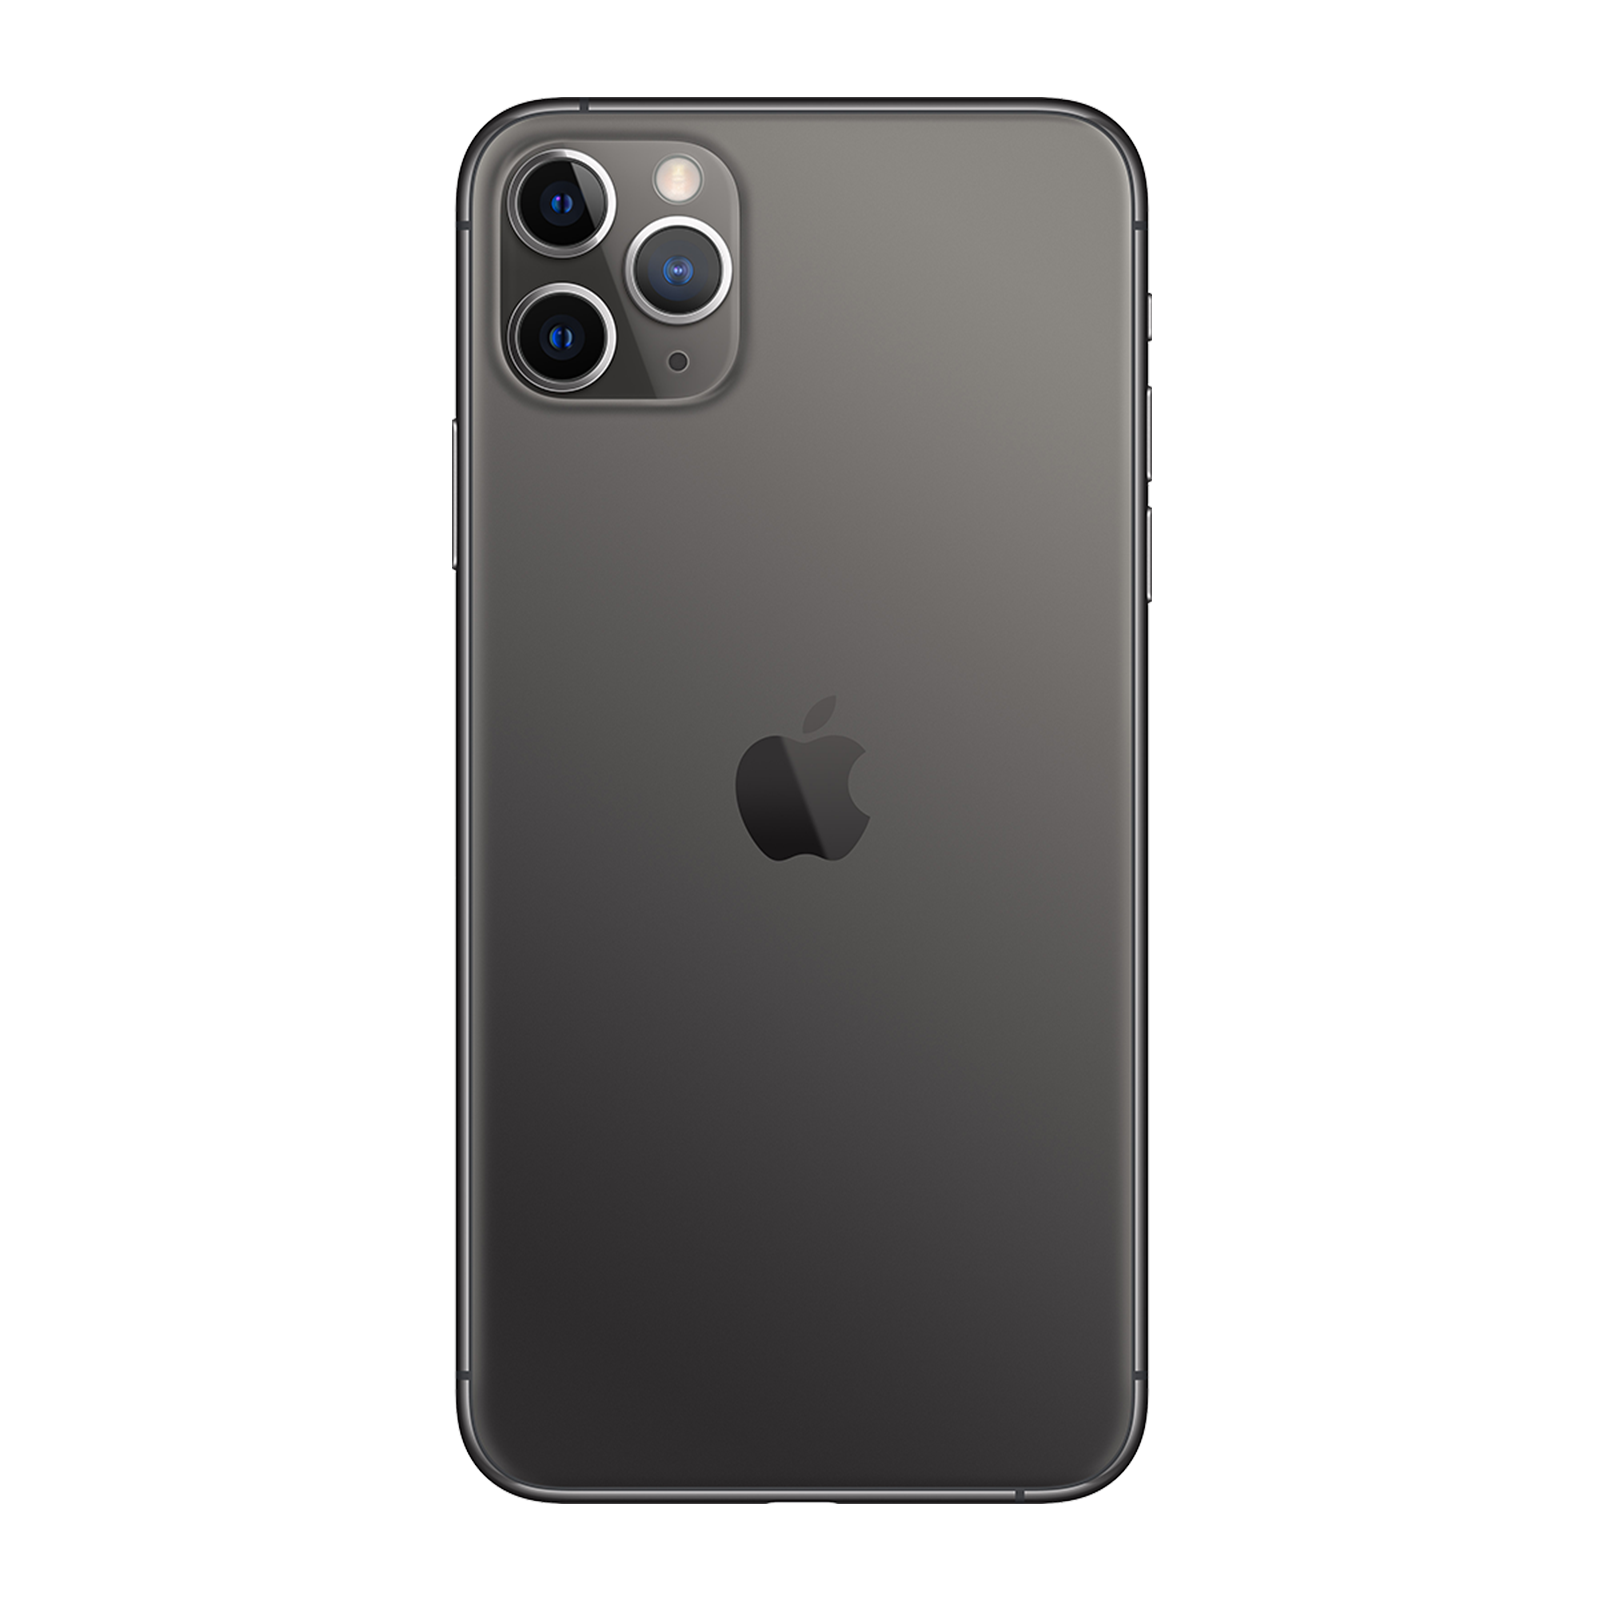 Apple iPhone 11 Pro Max 64GB Space Grey Good - Unlocked